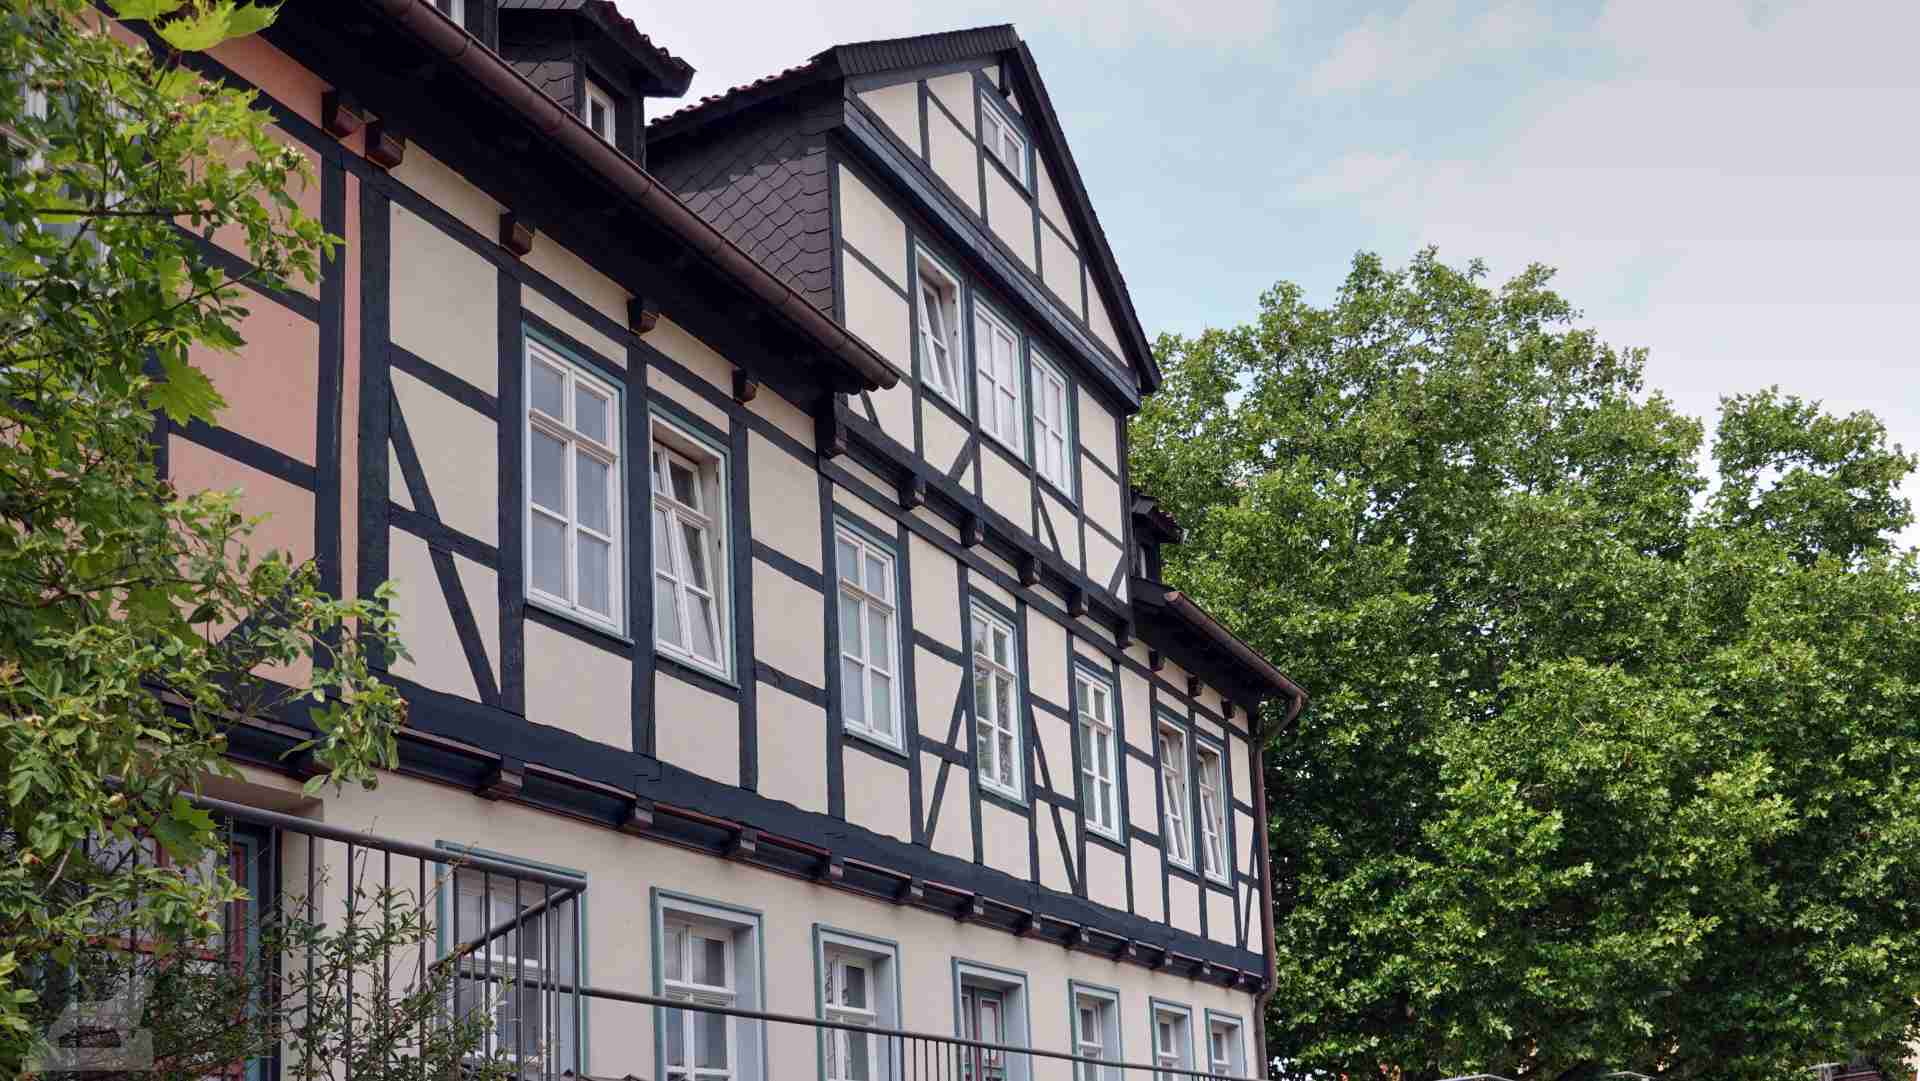 Leisewitz-Haus